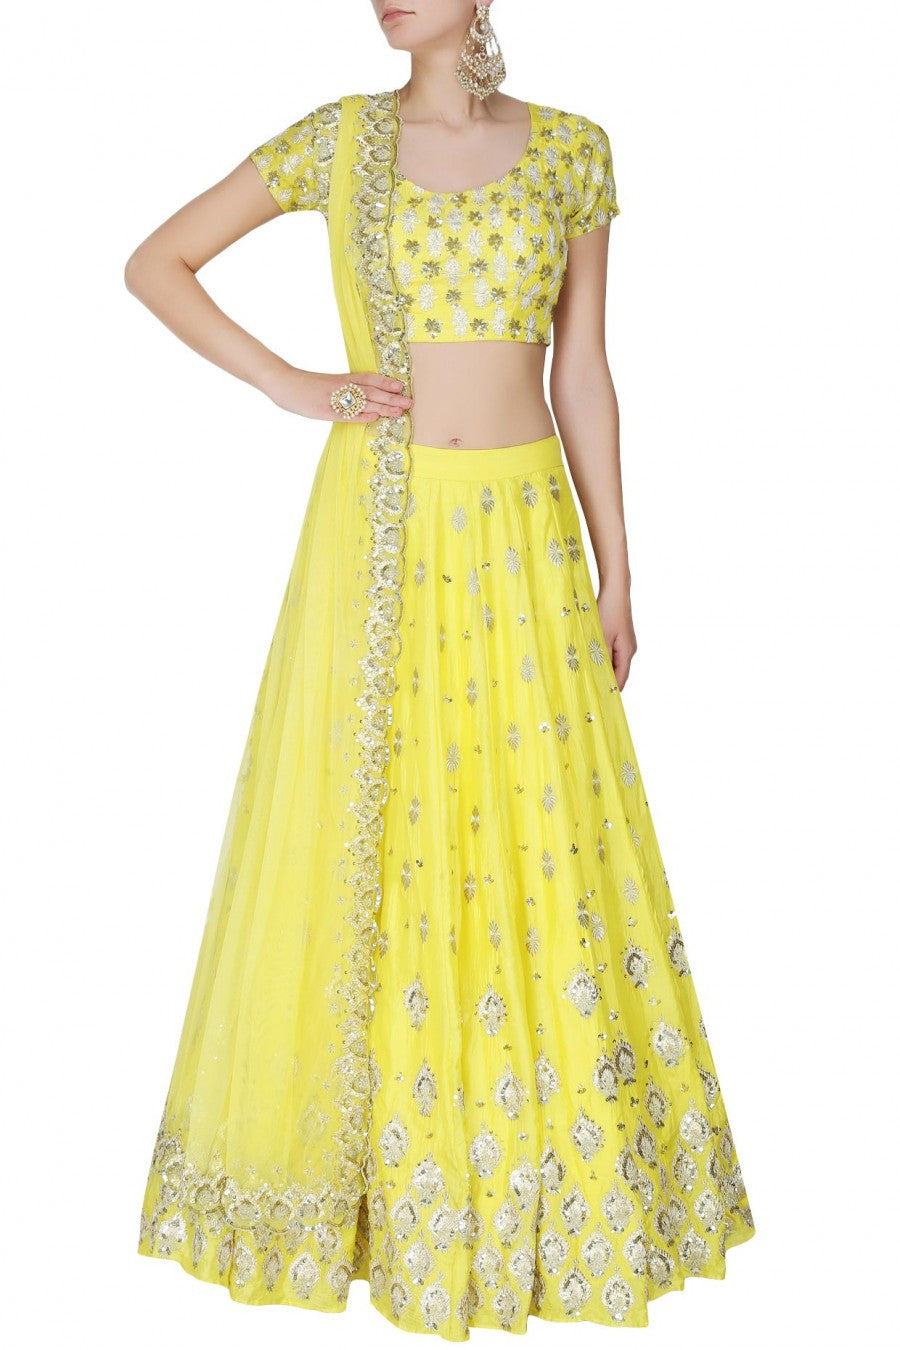 Bridal Lehenga: Buy Latest Indian Designer Bridal Lehenga Choli Online -  Utsav Fashion